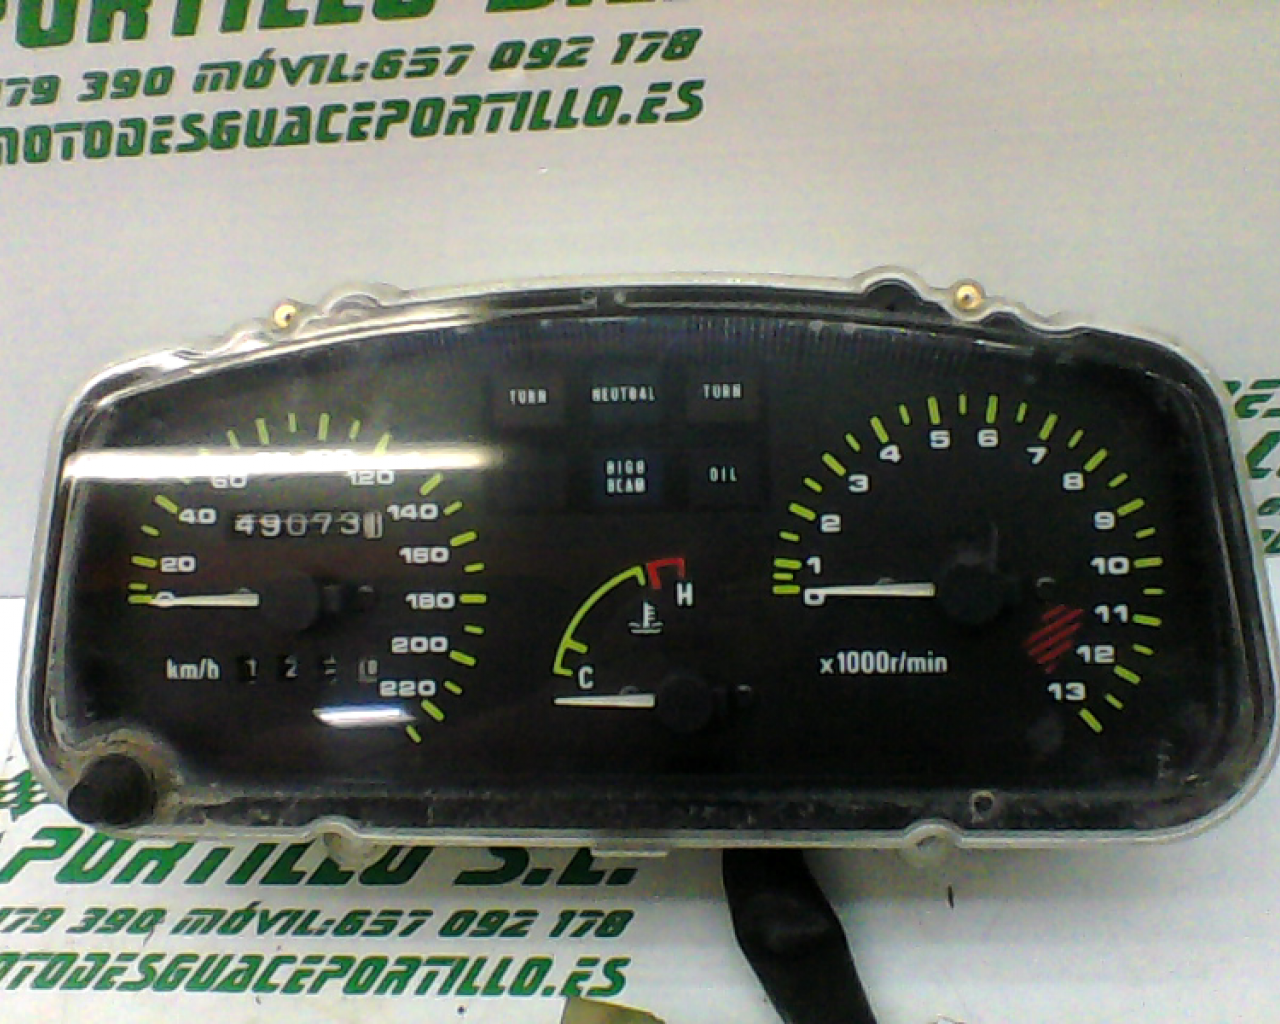 Cuentakilómetros Kawasaki Gpz 500 (1990-1994)